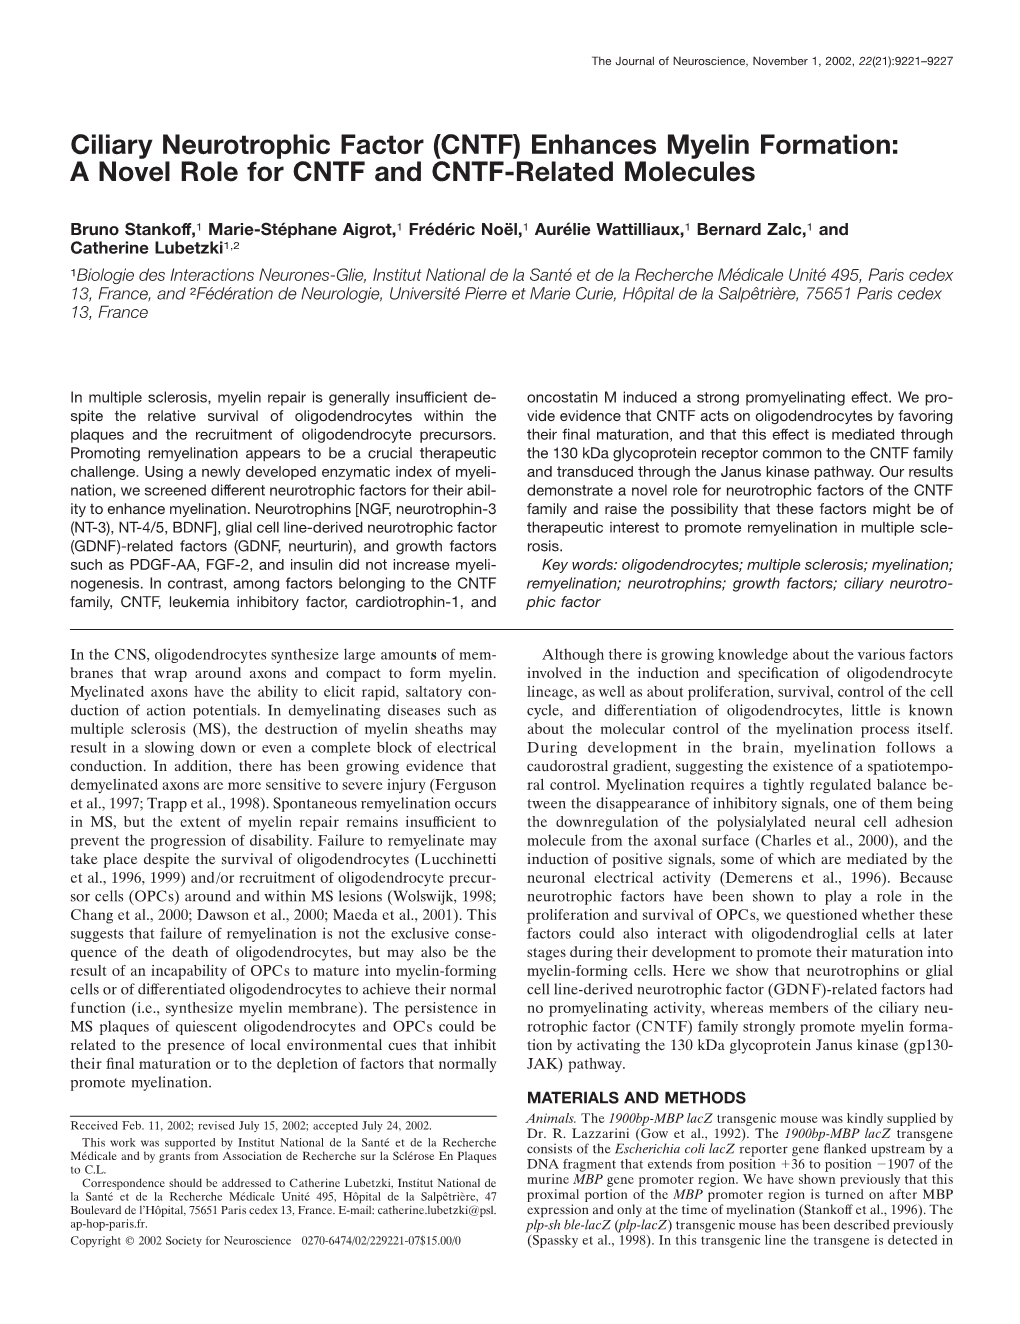 Ciliary Neurotrophic Factor (CNTF) Enhances Myelin Formation: a Novel Role for CNTF and CNTF-Related Molecules